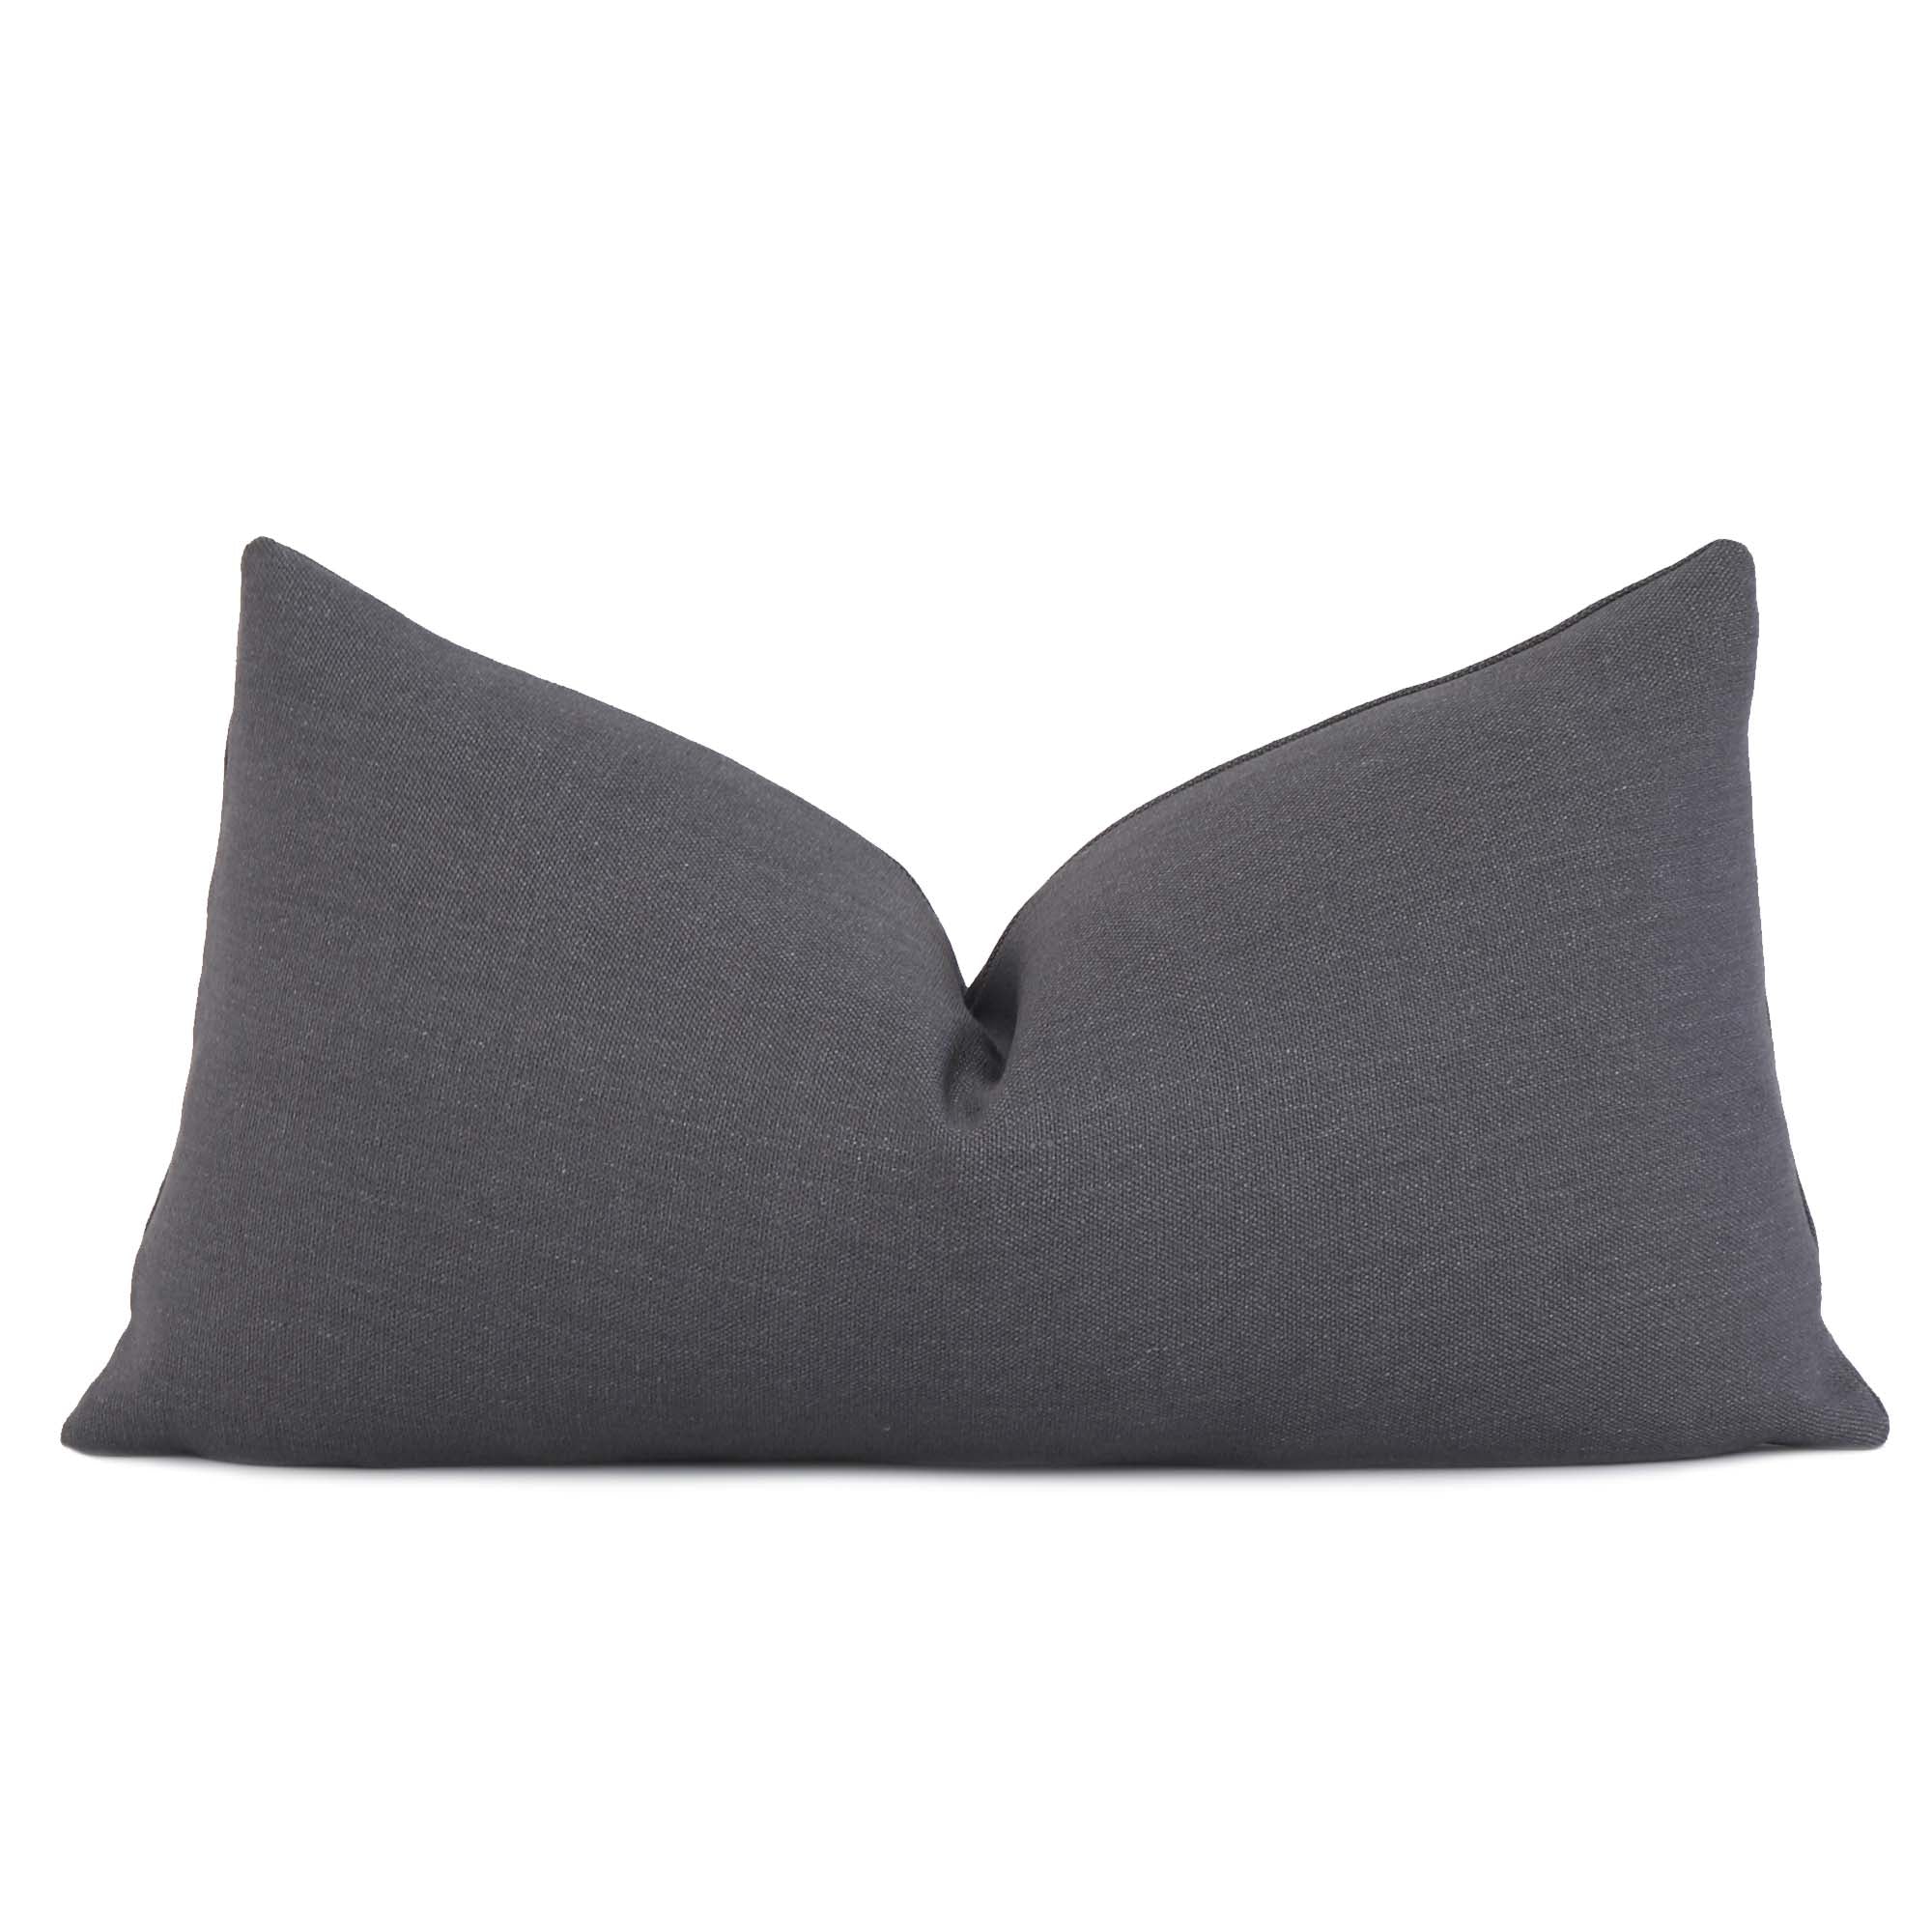 Tay Gray Solid Color Linen Designer Lumbar Throw Pillow Cover